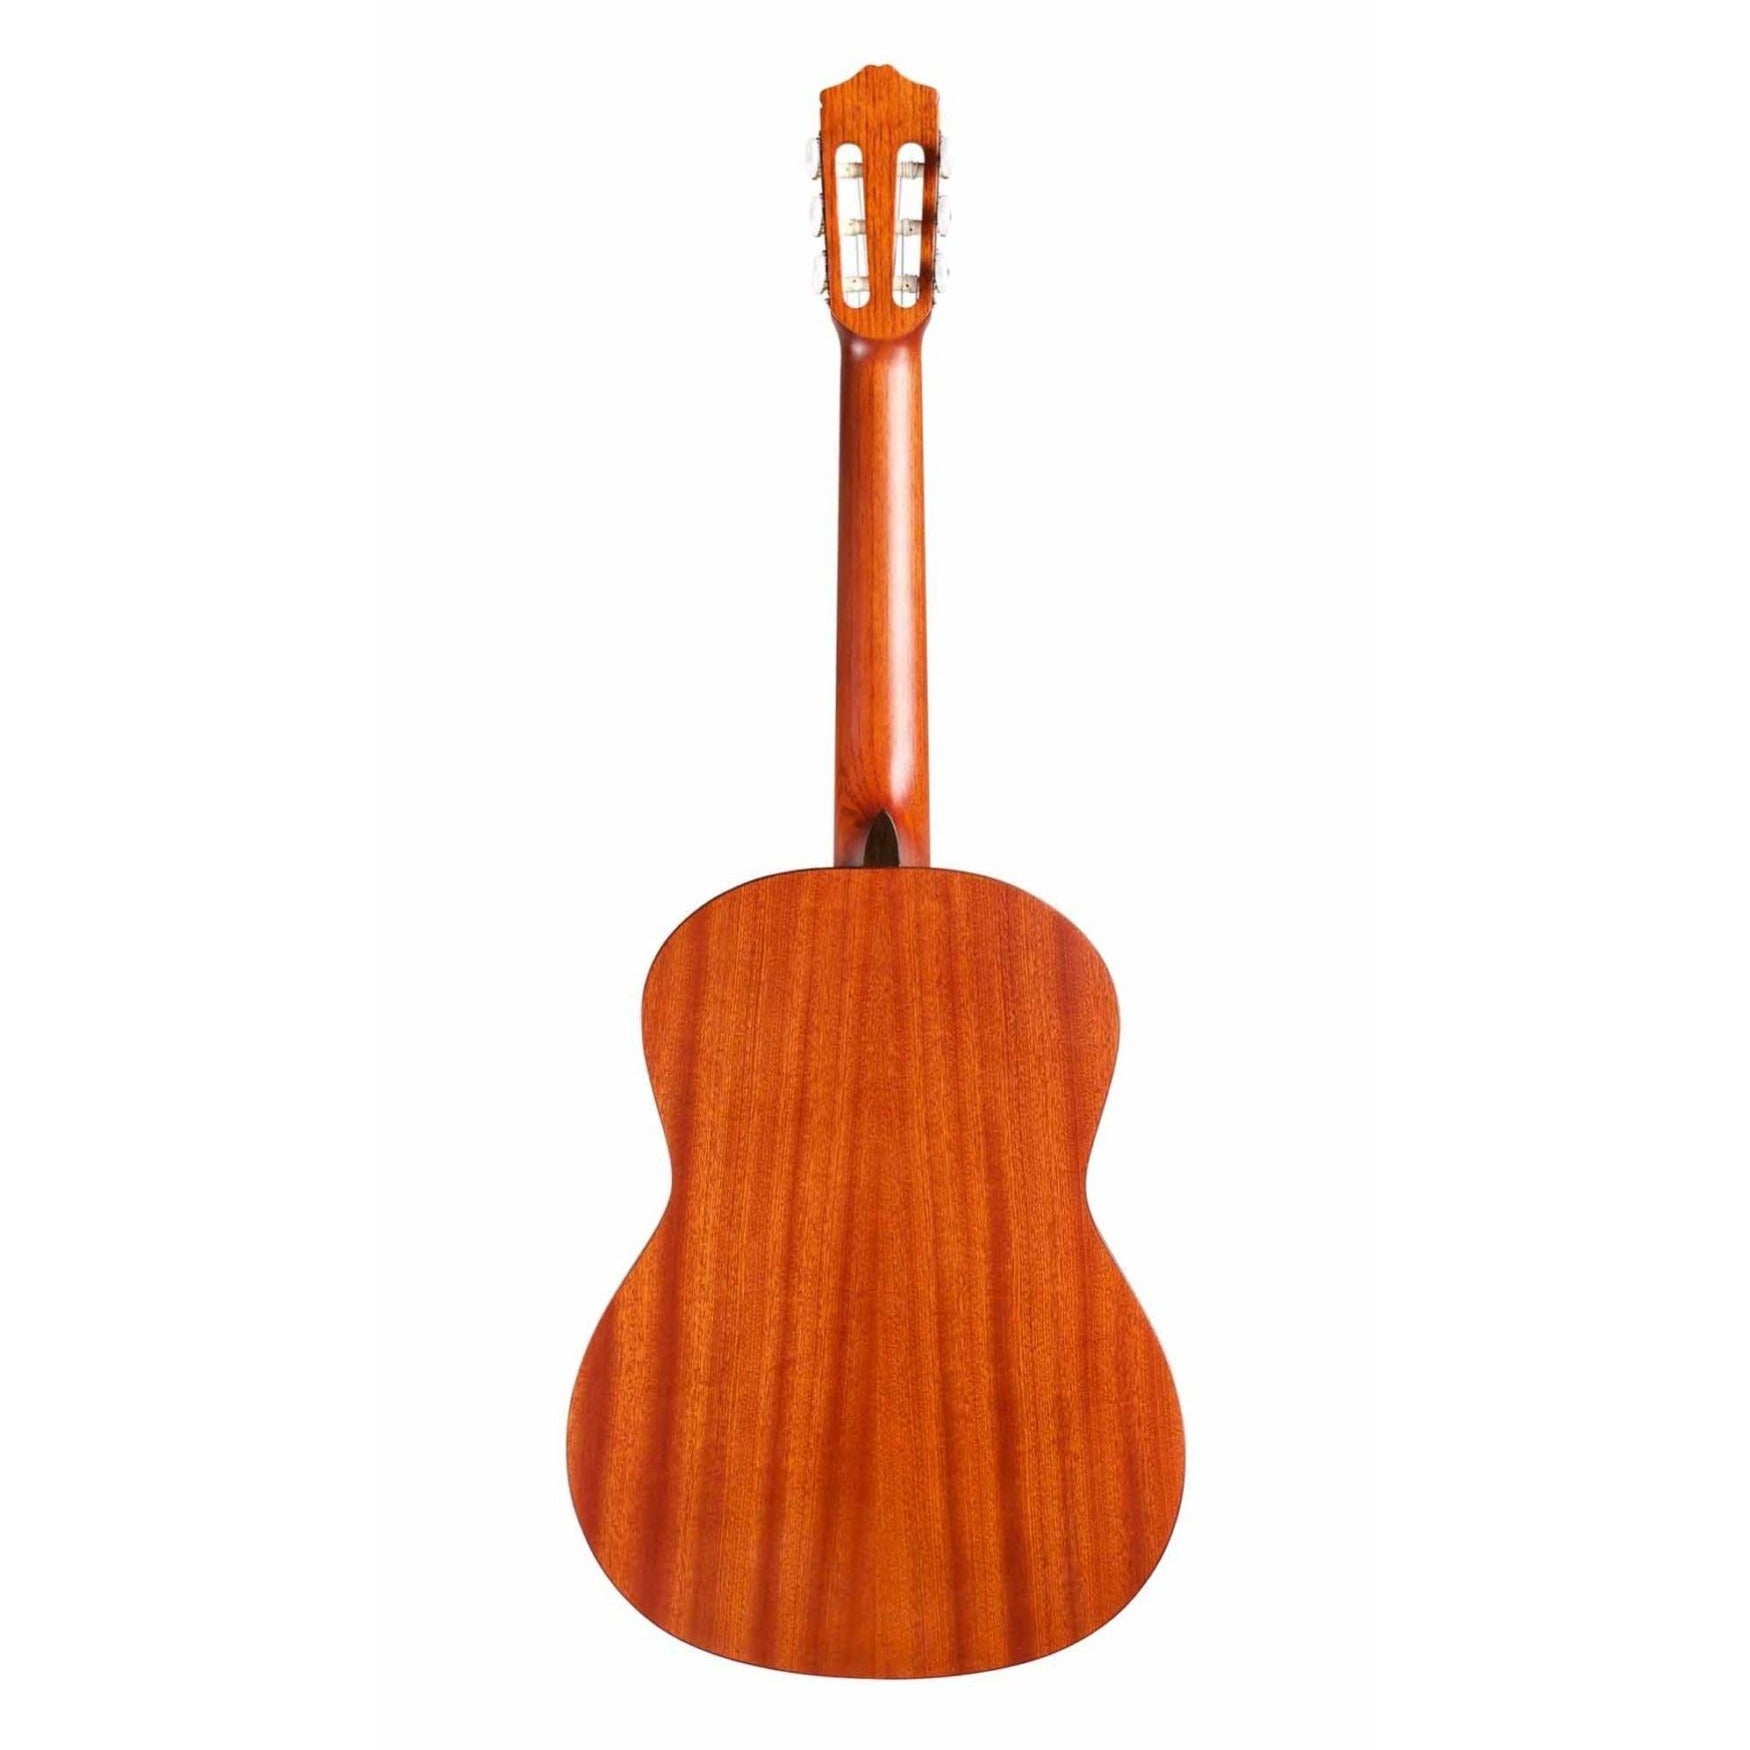 Cordoba C3M 3/4-Size Nylon String Guitar